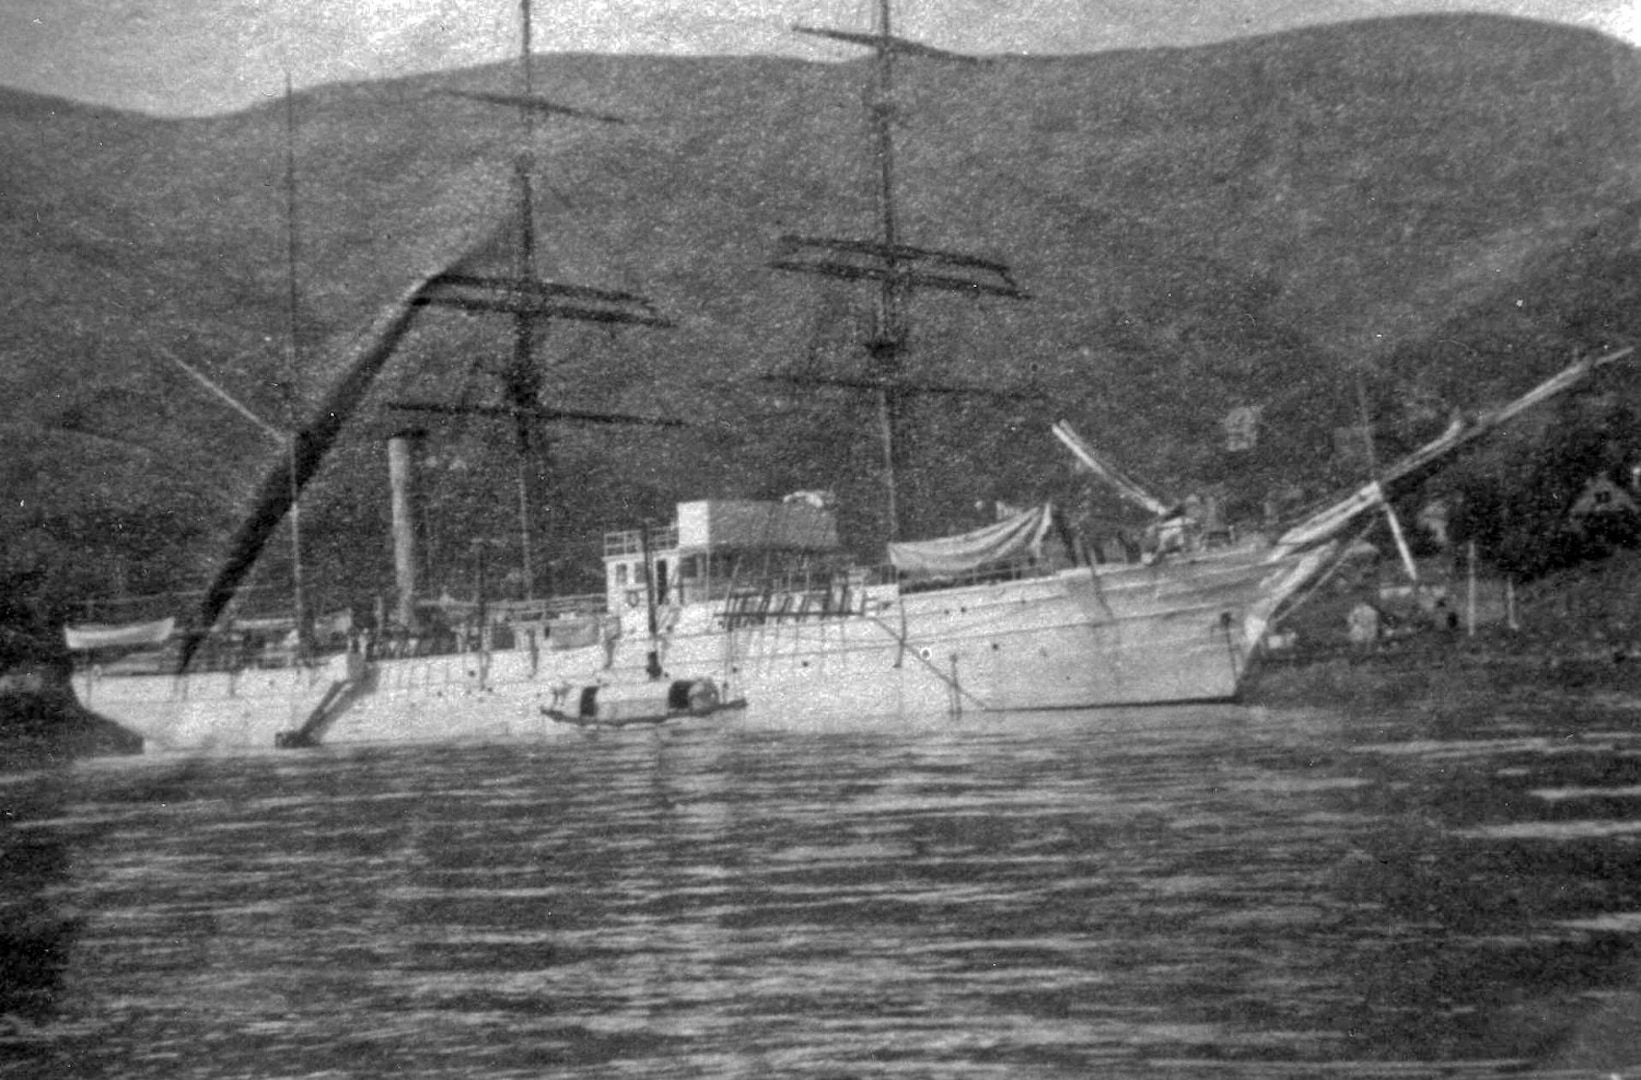 Rare photograph of Thetis at anchor in calm Hawaiian waters.